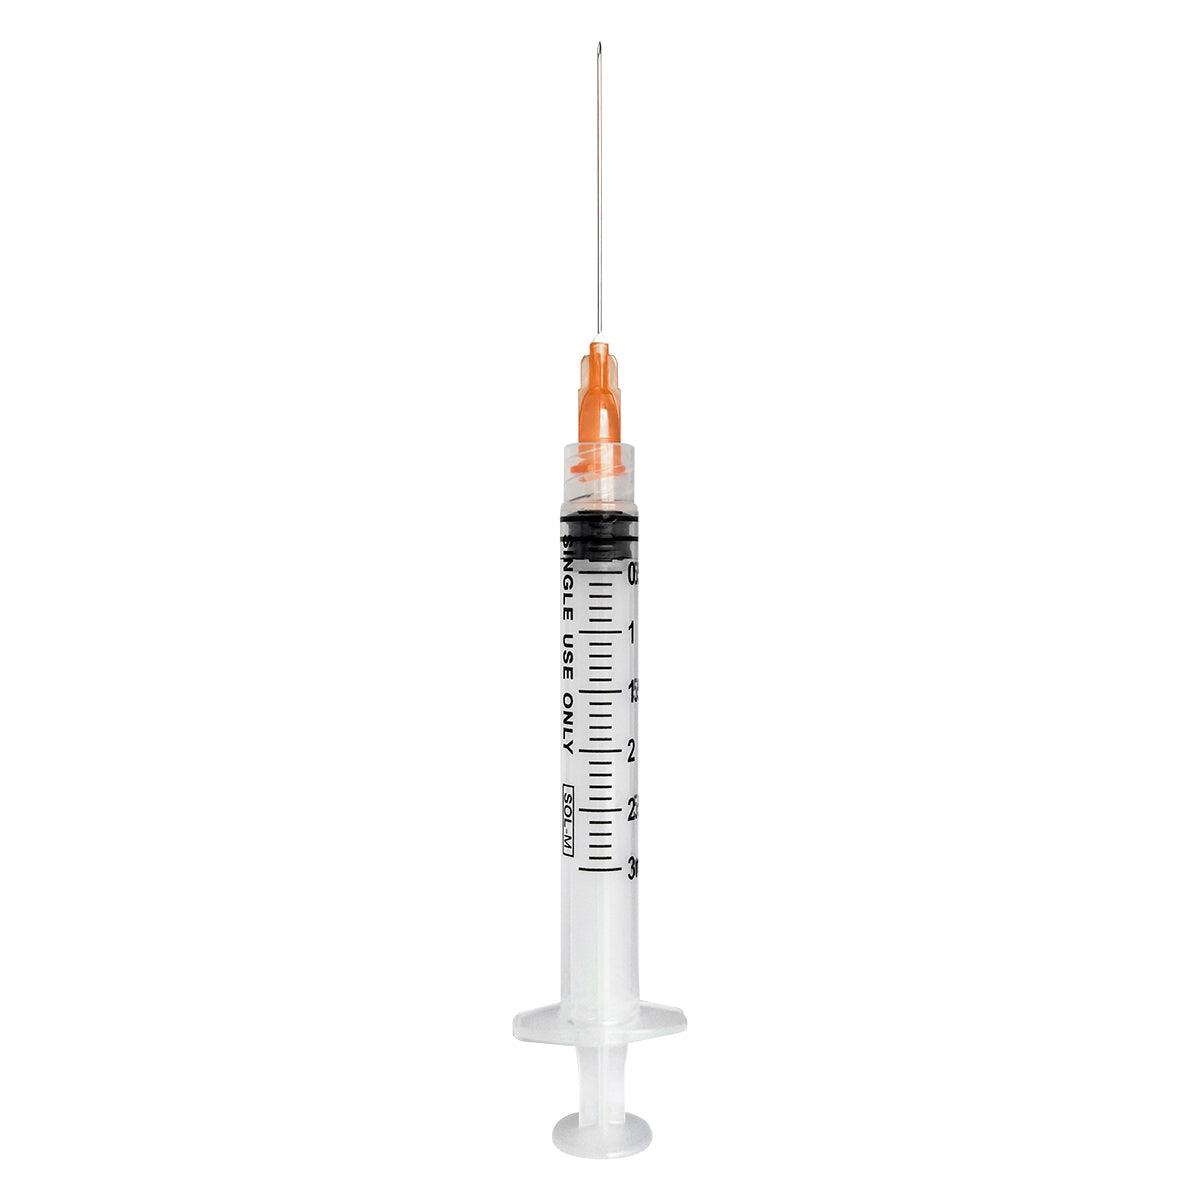 3mL | 25G x 1" | Sol-M 1832510 Luer Lock Syringe with Exchangeable Needle (100pcs)